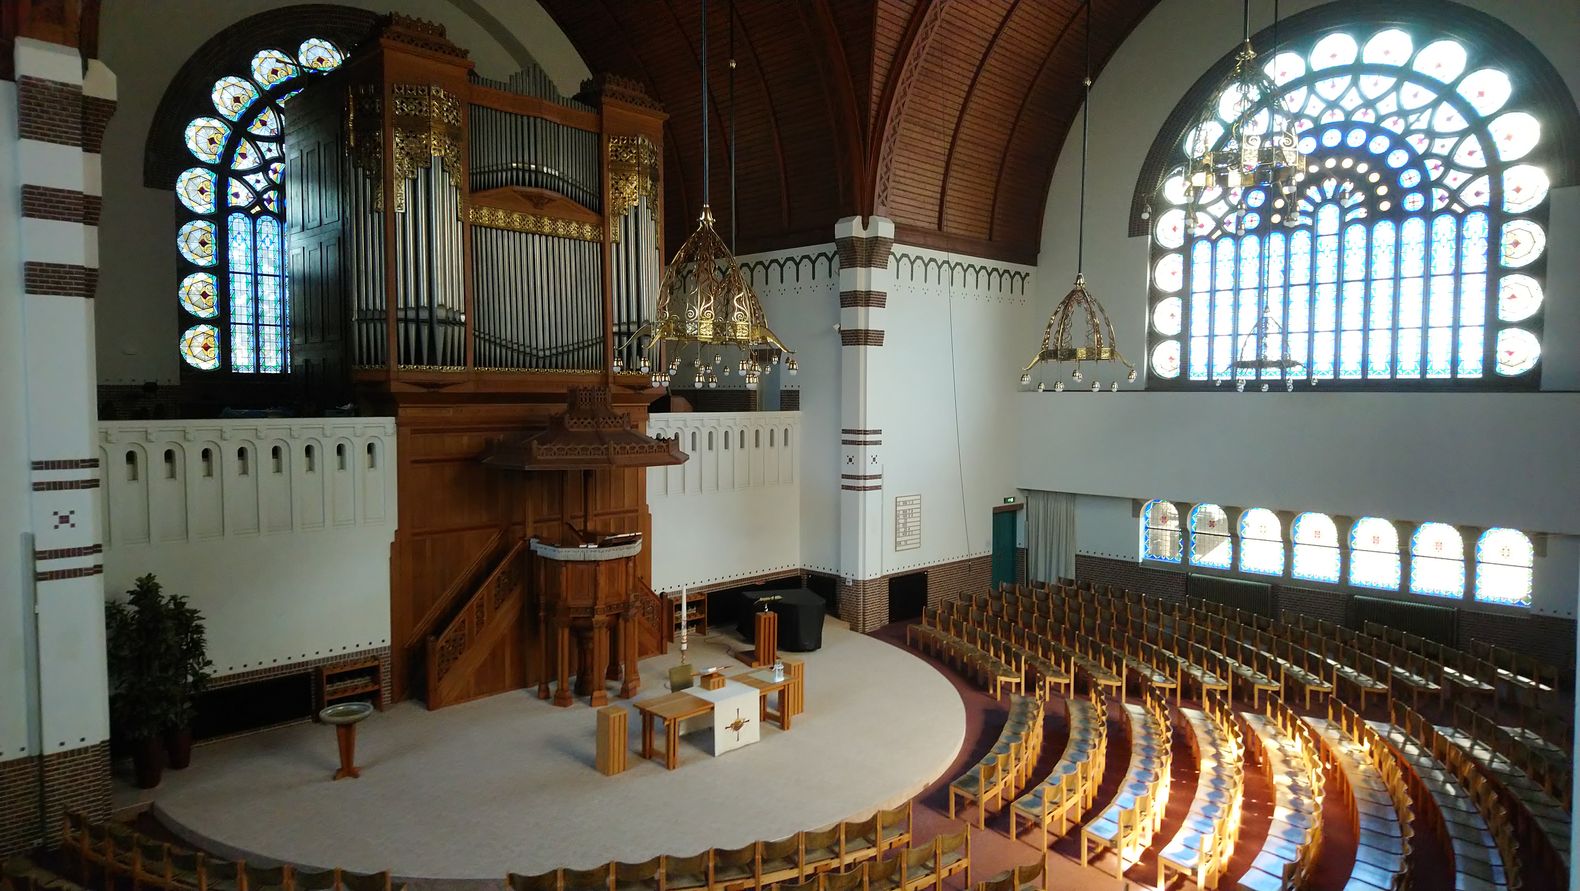 De steinmeyer orgel in de Adventskerk.